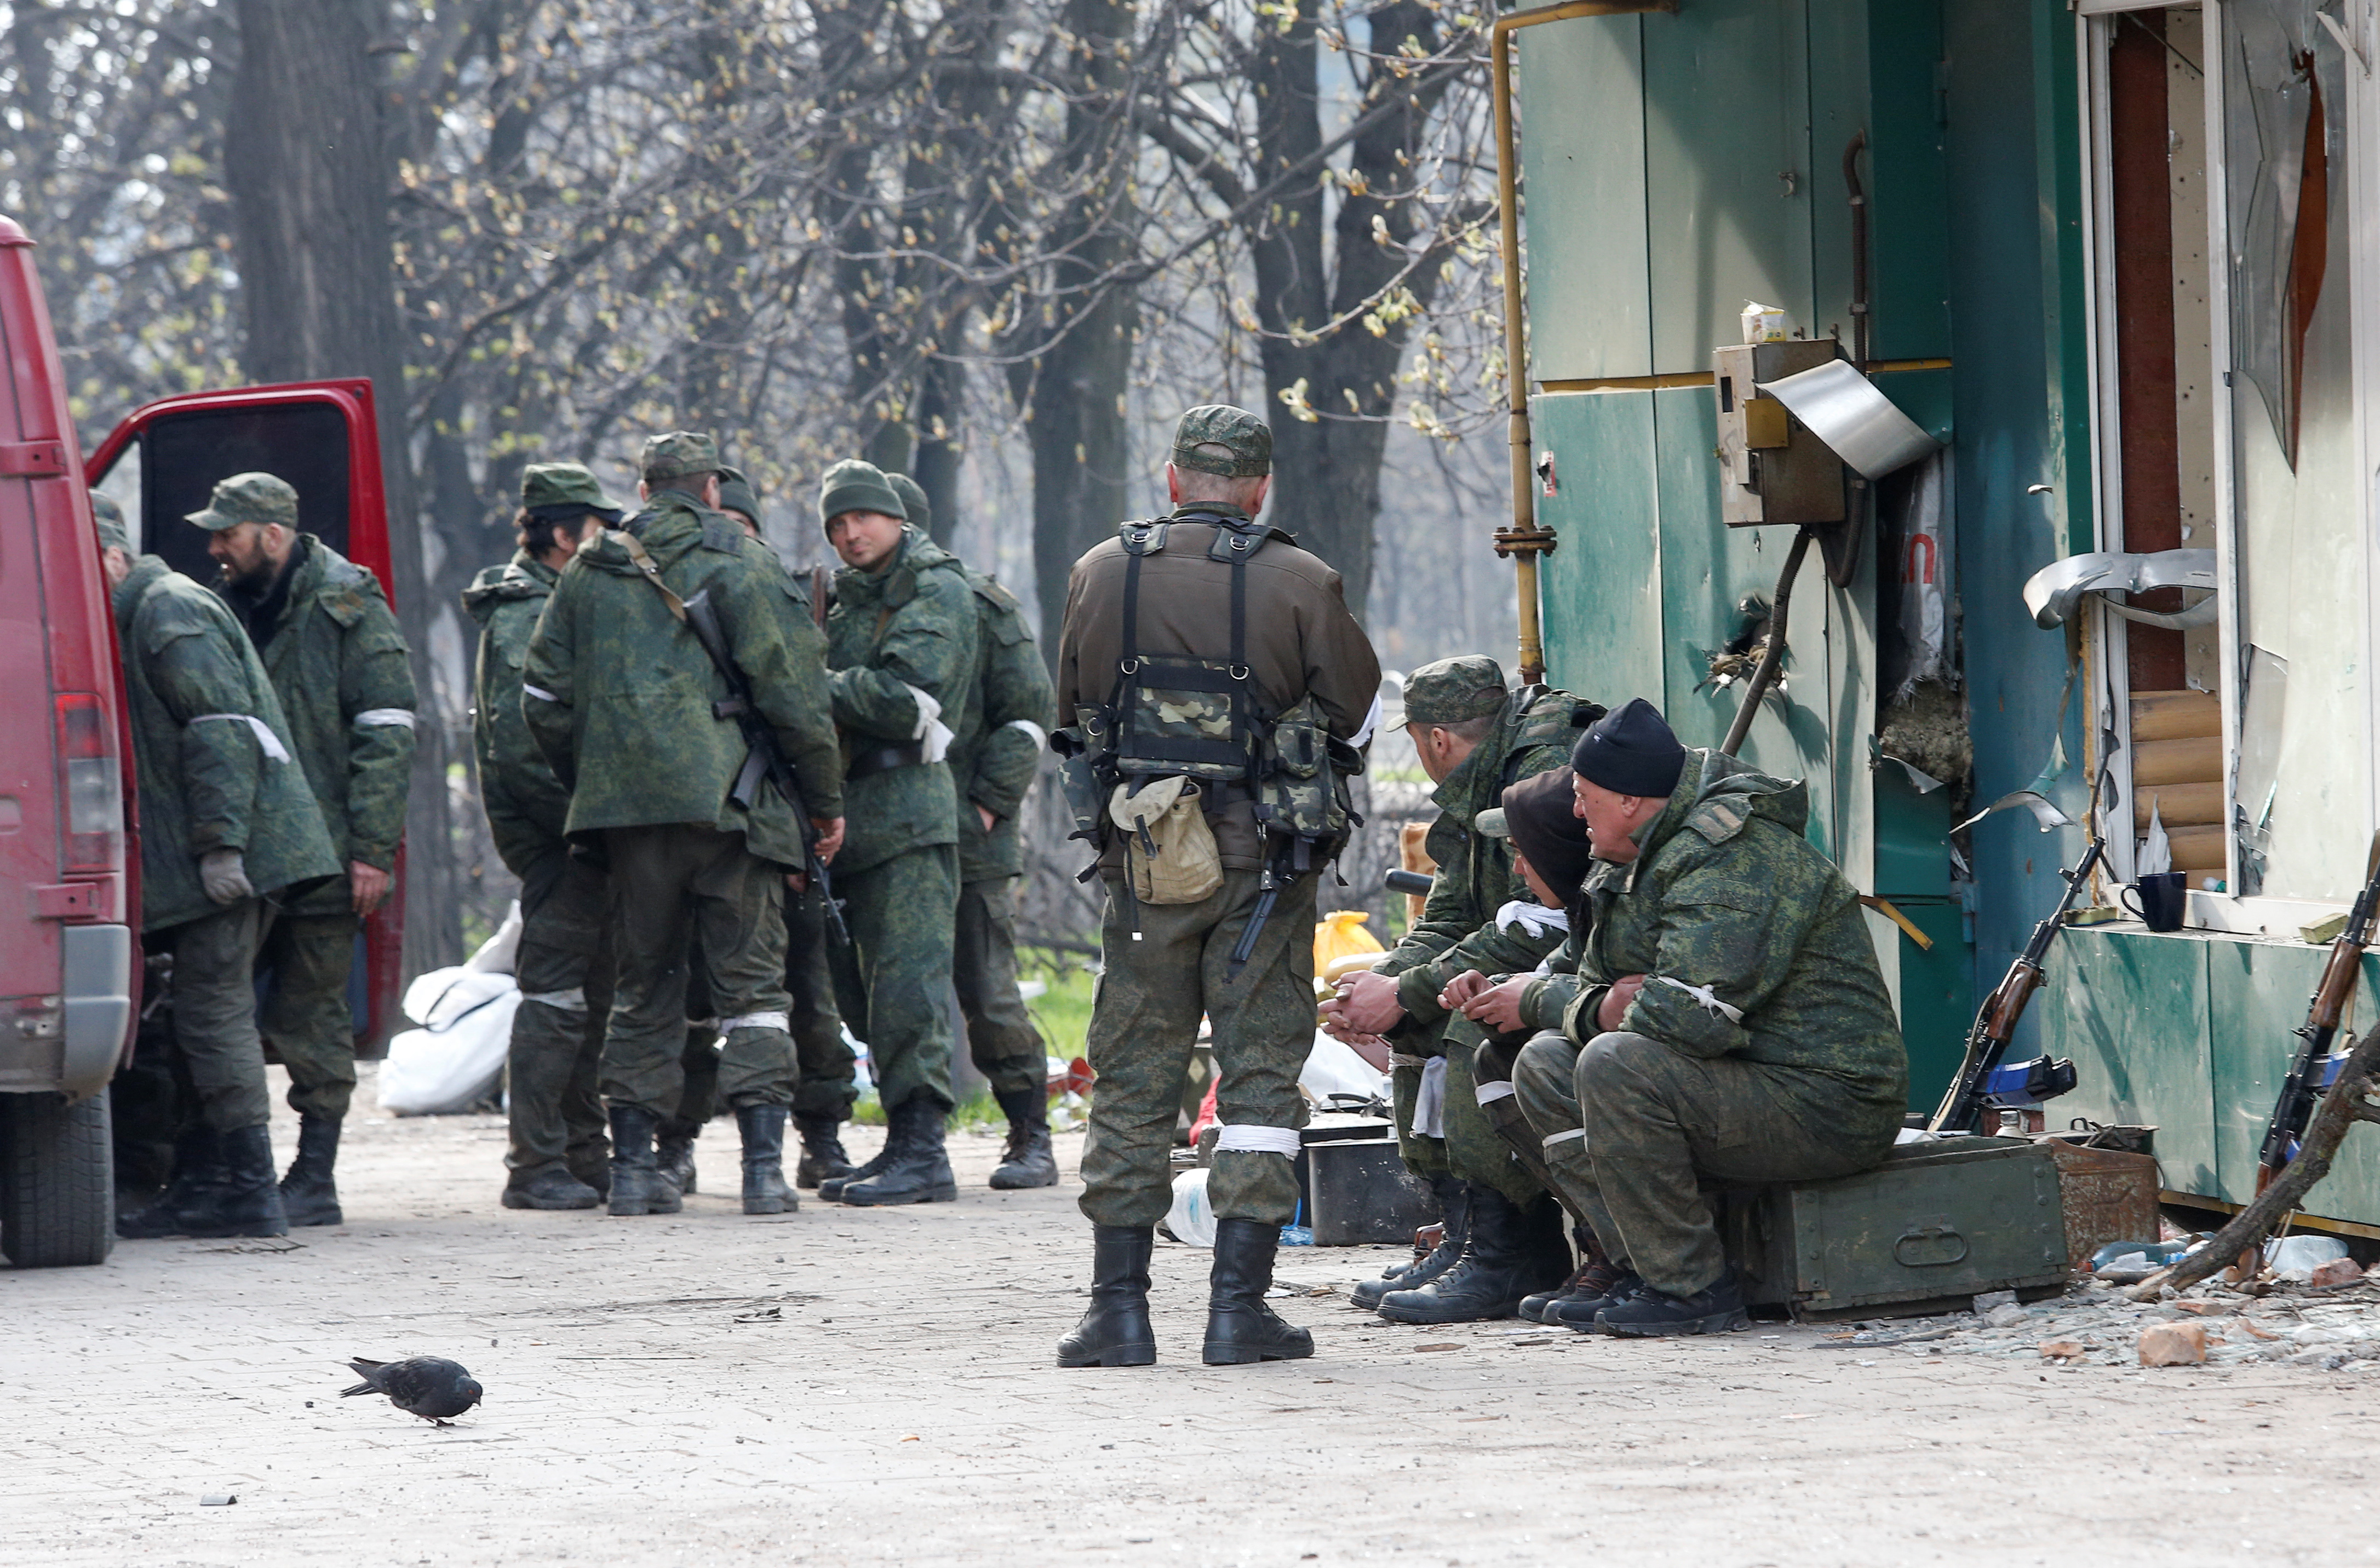 Service members of pro-Russian troops gather in a street in Mariupol